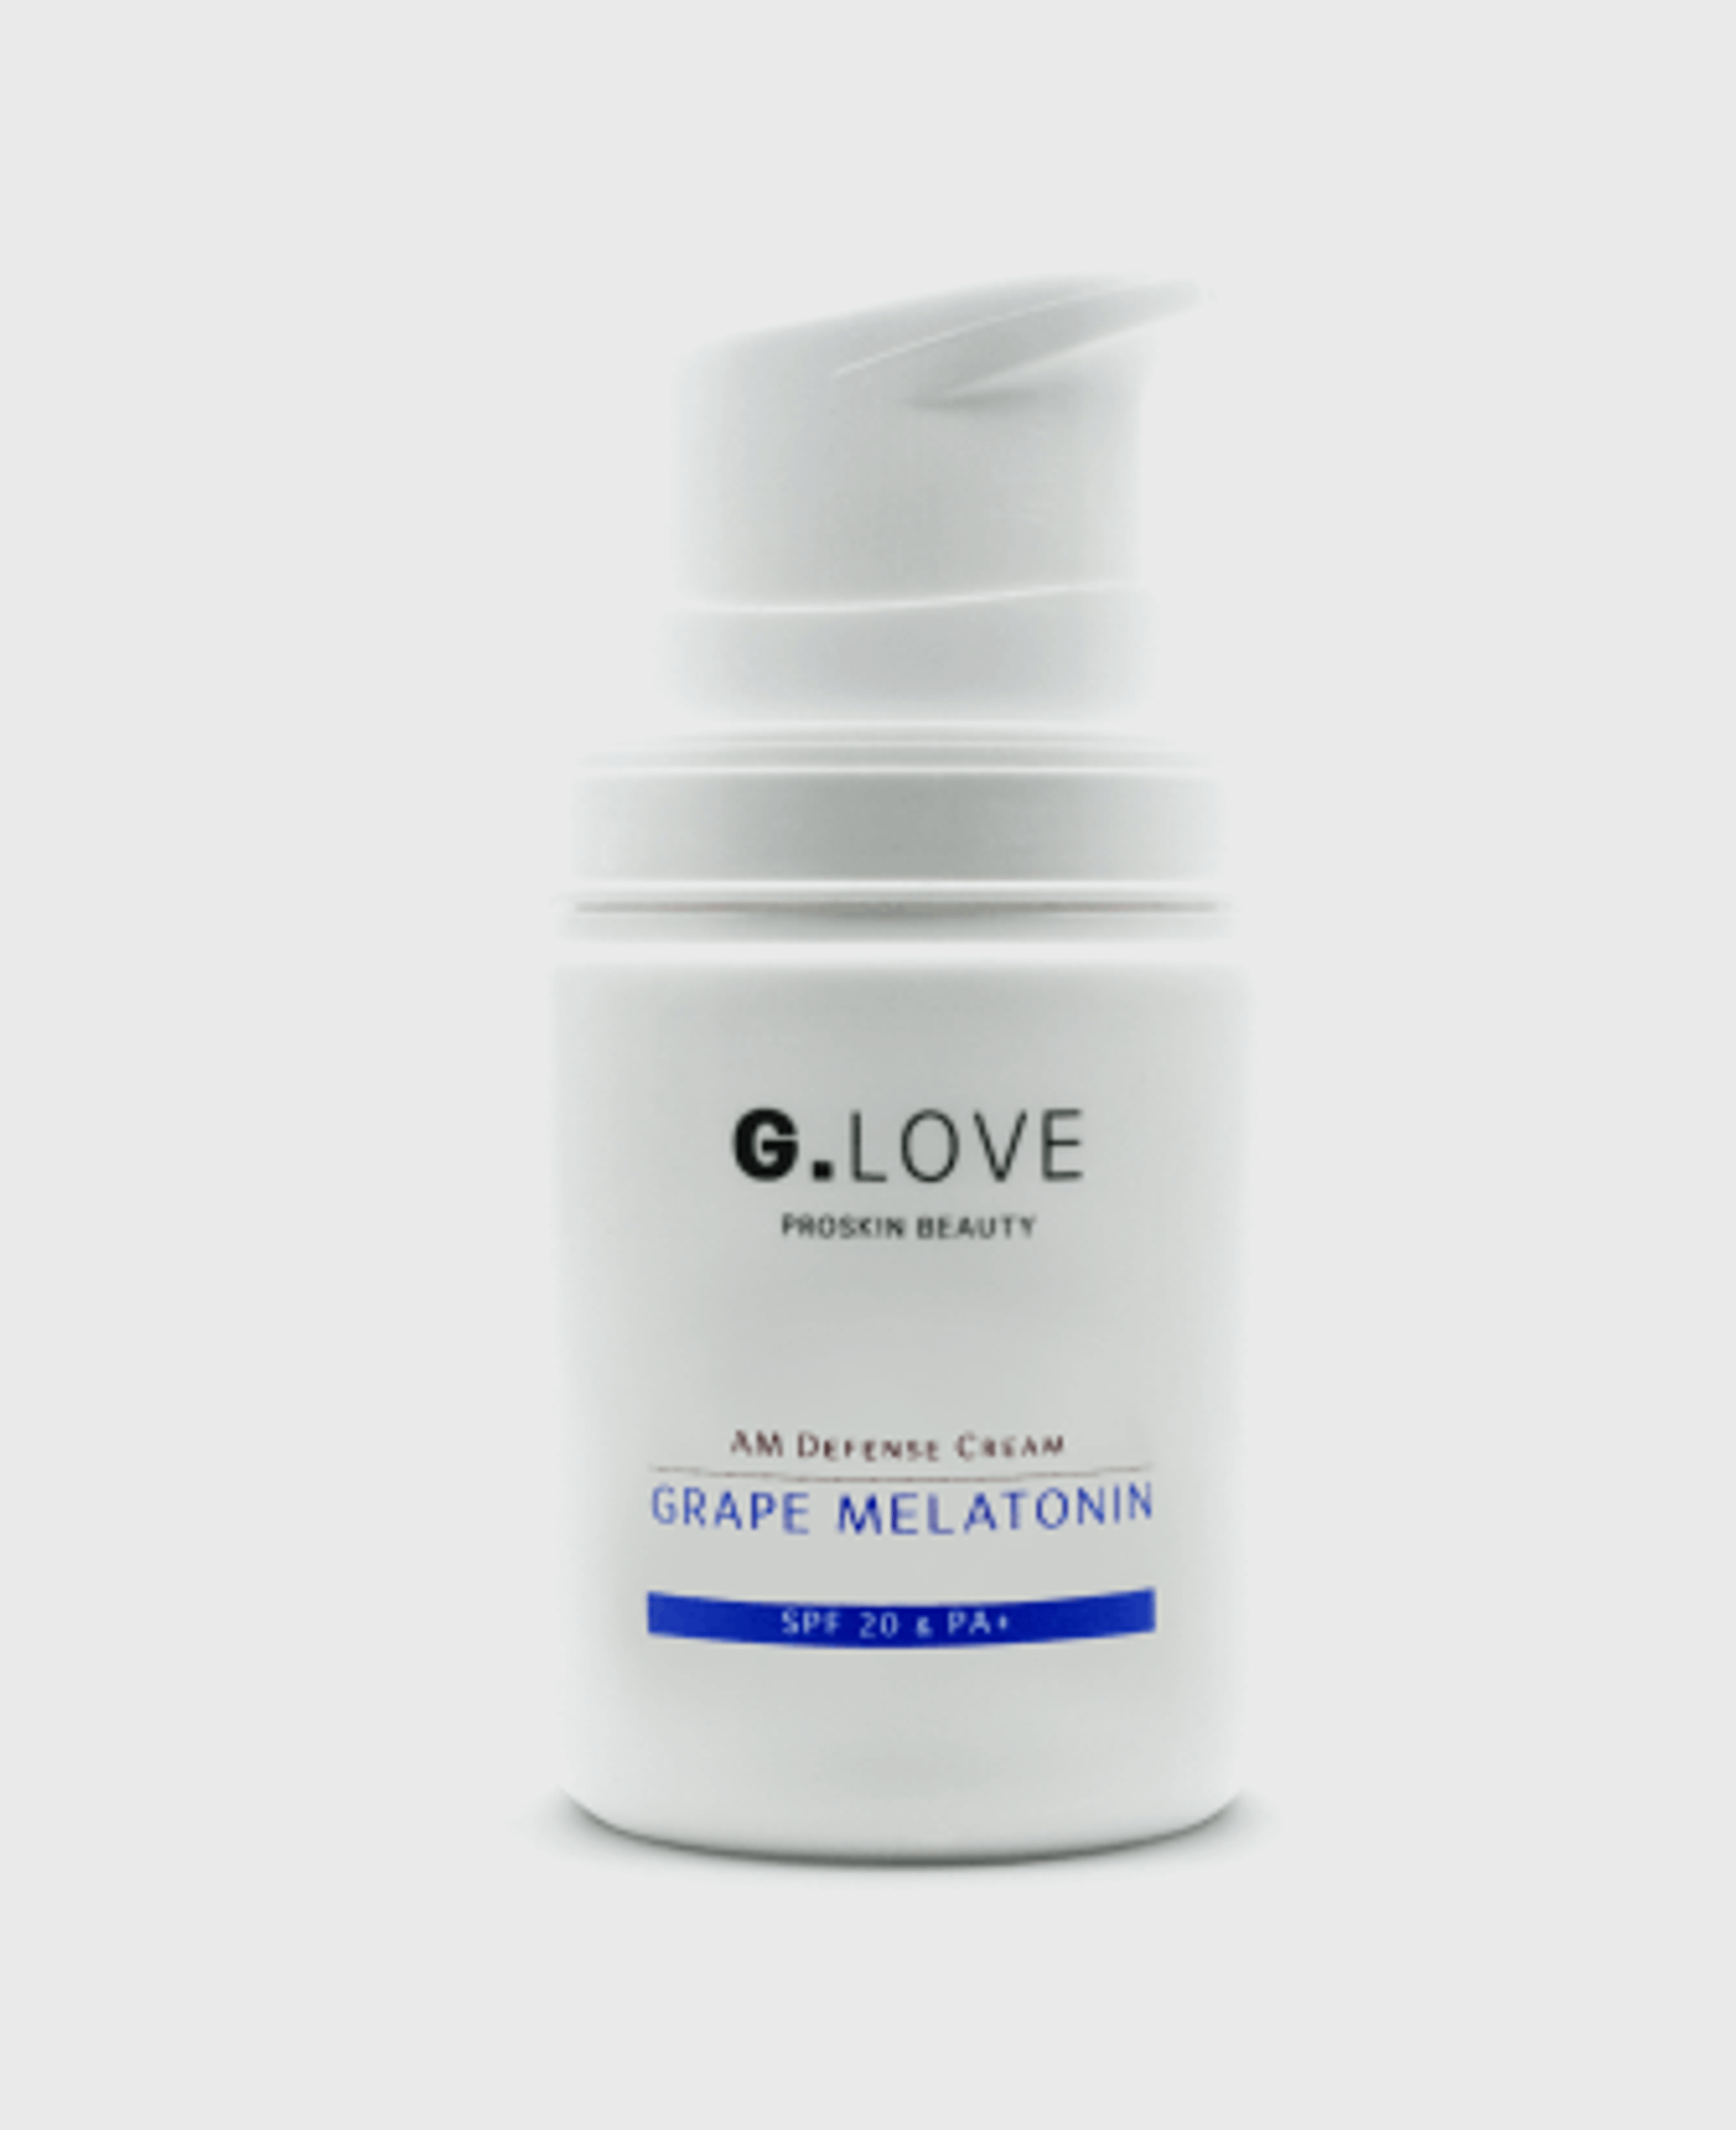 G.Love AM Defense Cream Grape Melatonin SPF 20